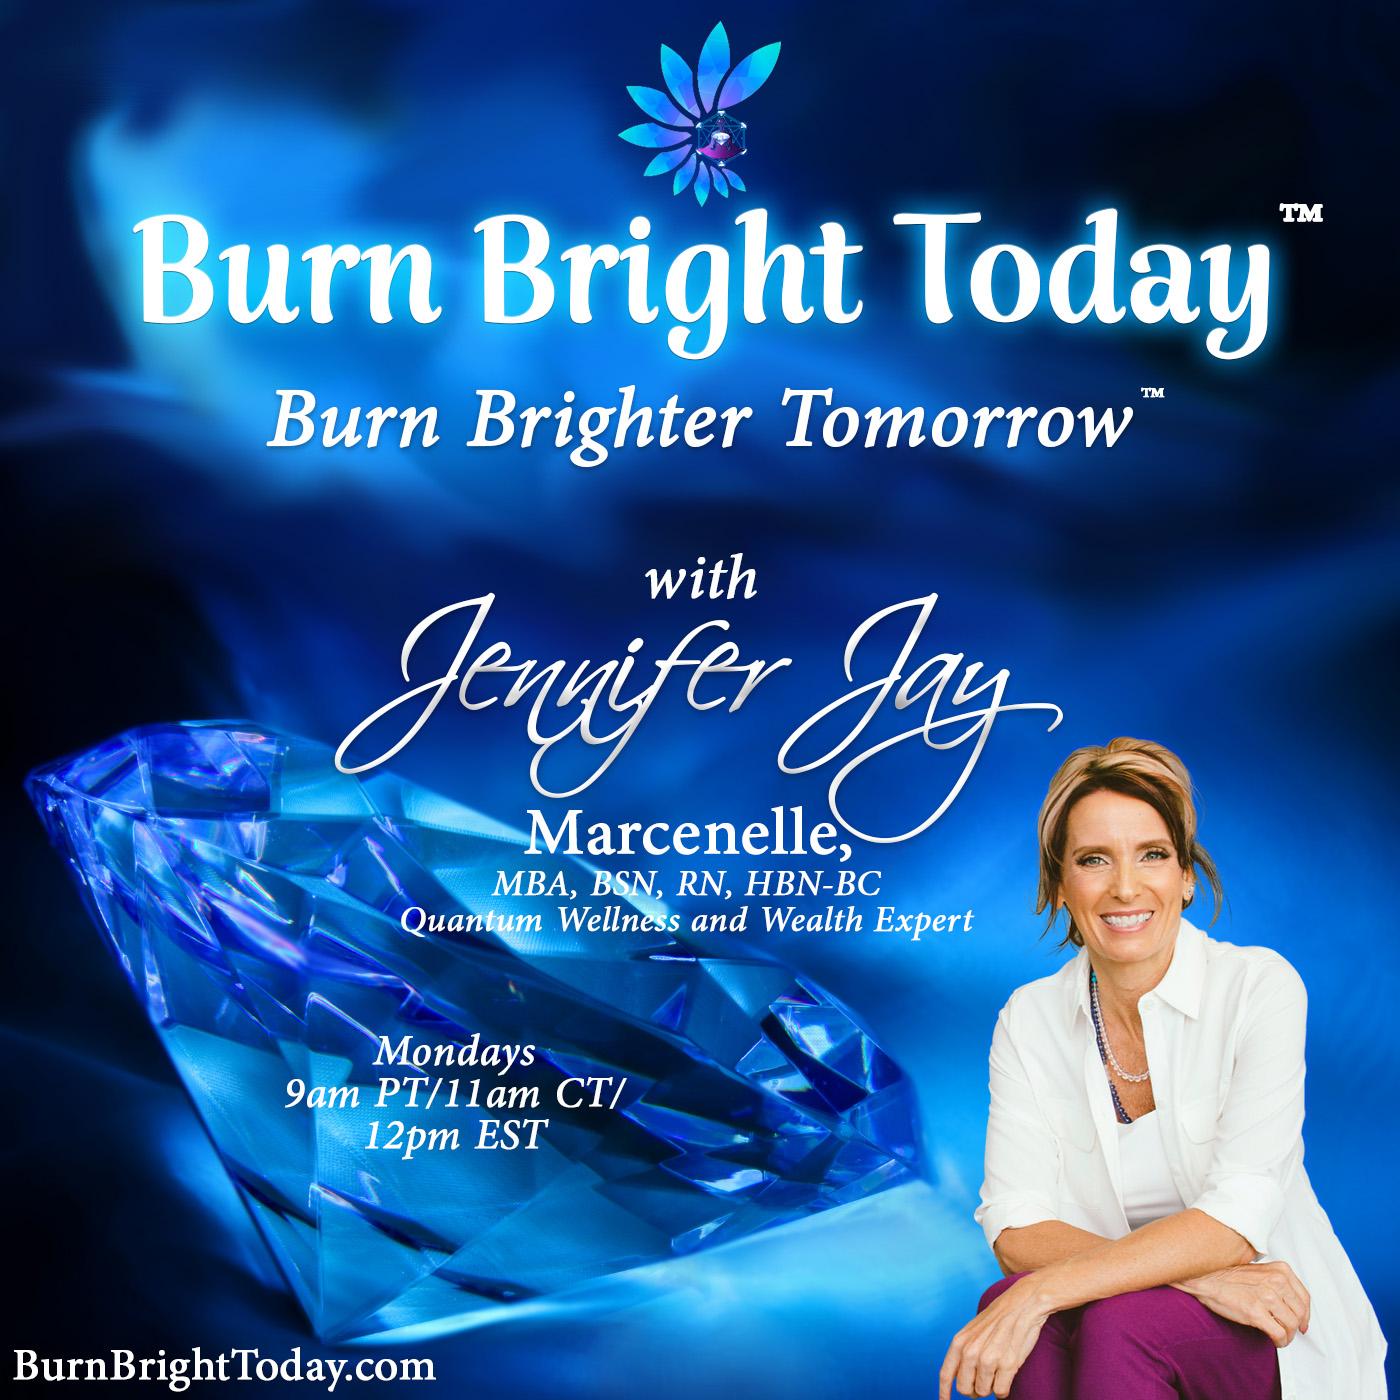 Burn Bright Today: Burn Brighter Tomorrow with Jennifer Jay